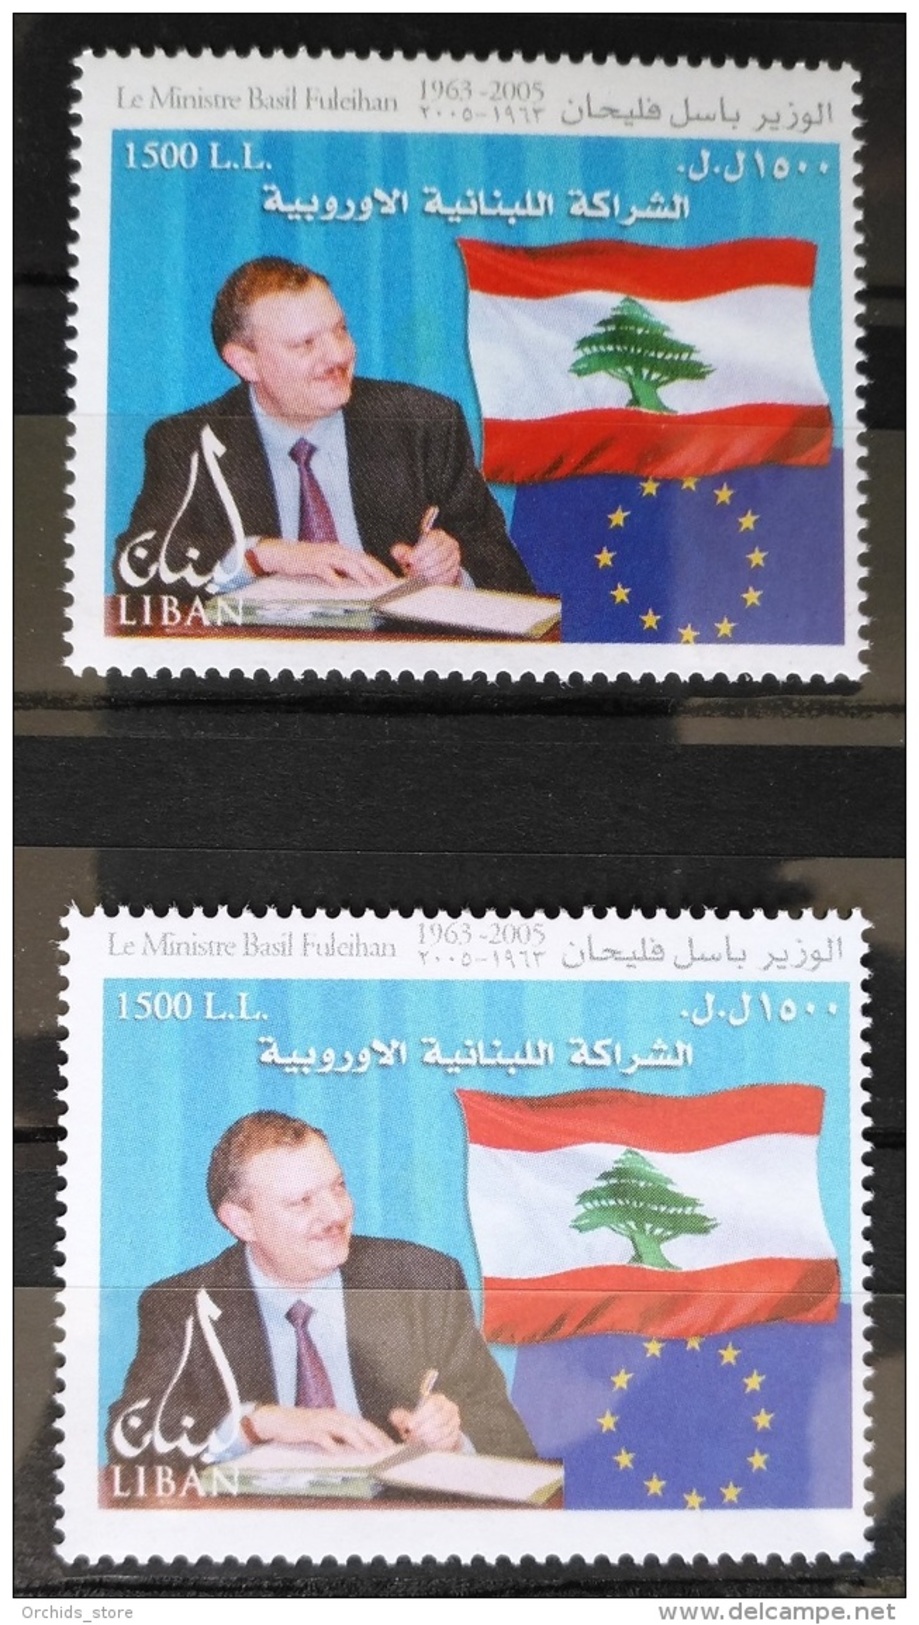 Lebanon 2007 Basil Fuleihan 1500L Variety Stamp + Normal, MNH - Líbano